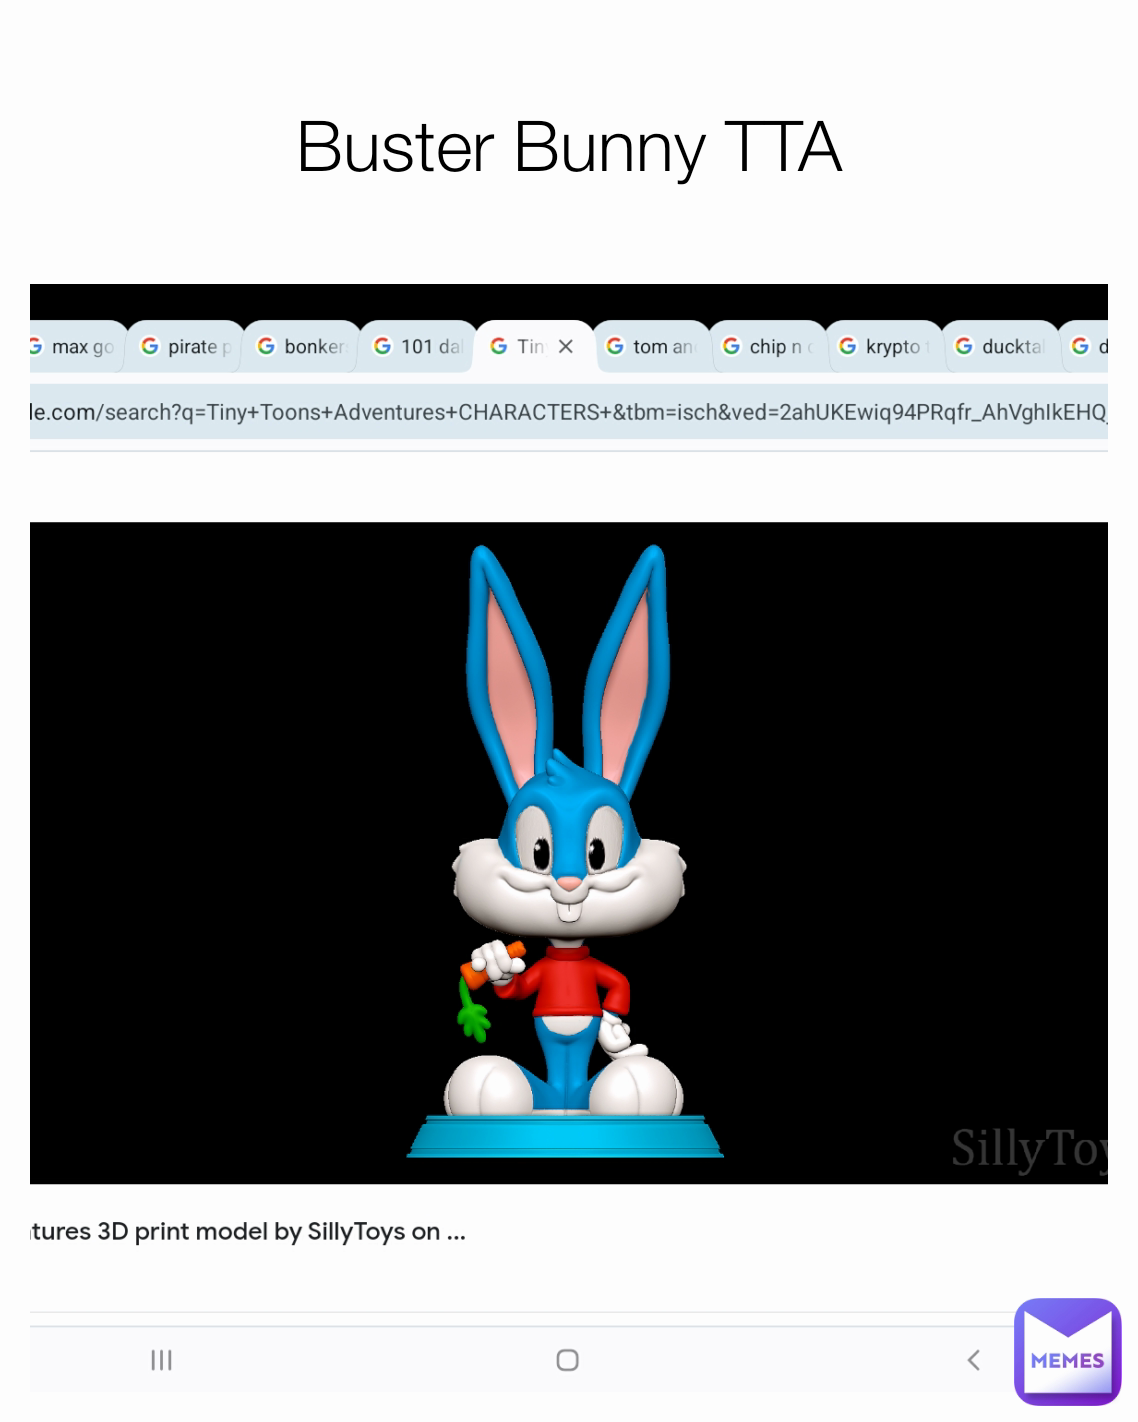 Buster Bunny TTA